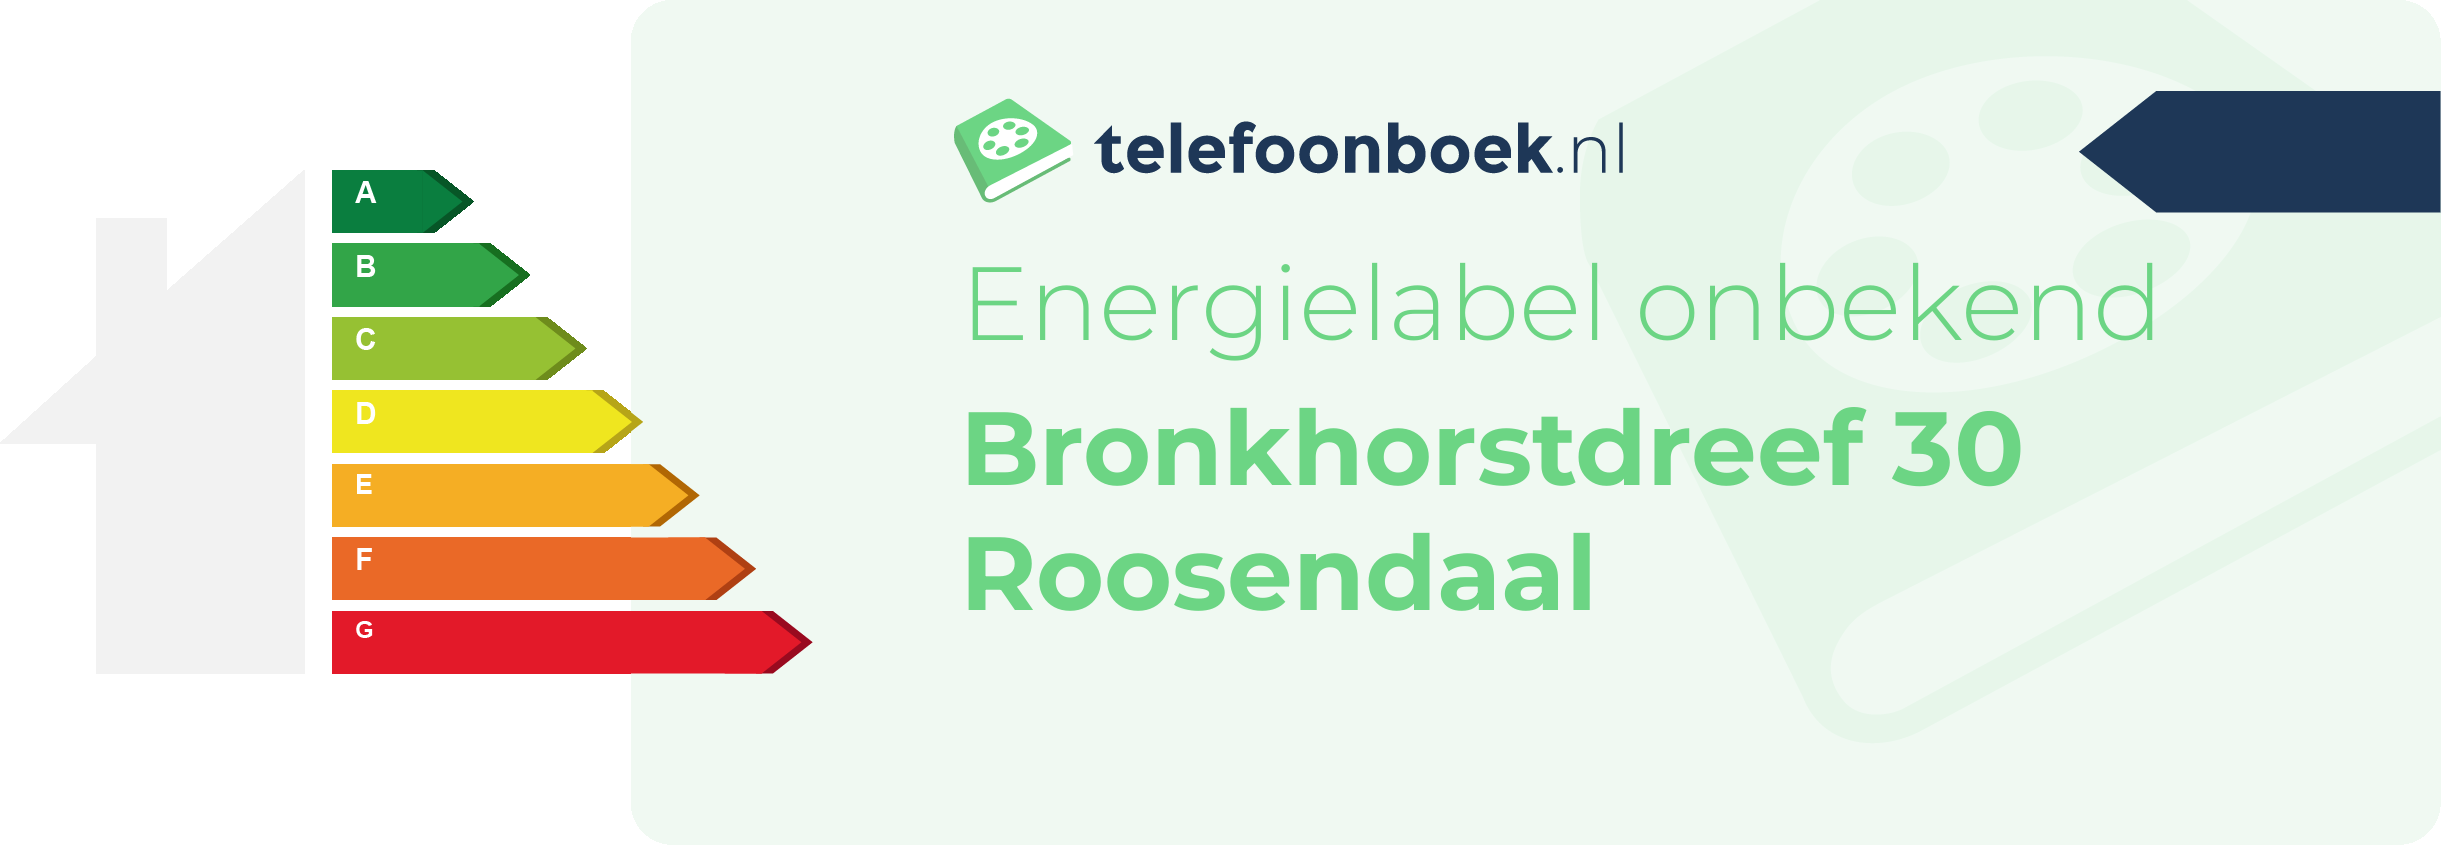 Energielabel Bronkhorstdreef 30 Roosendaal